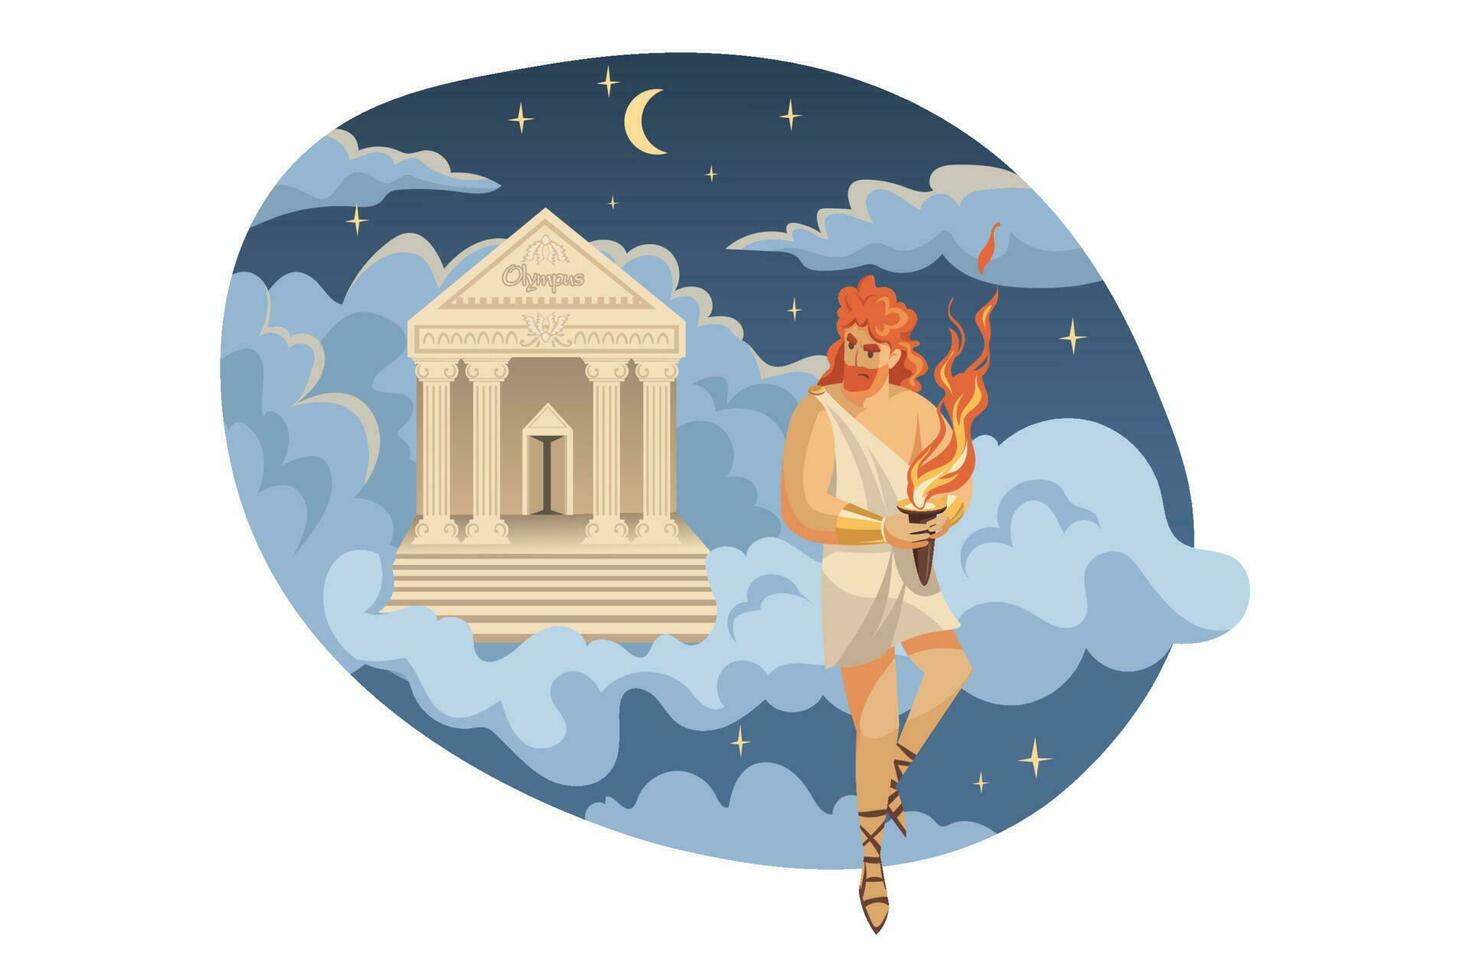 mitología, Grecia, Olimpo, leyenda, religión concepto. vector